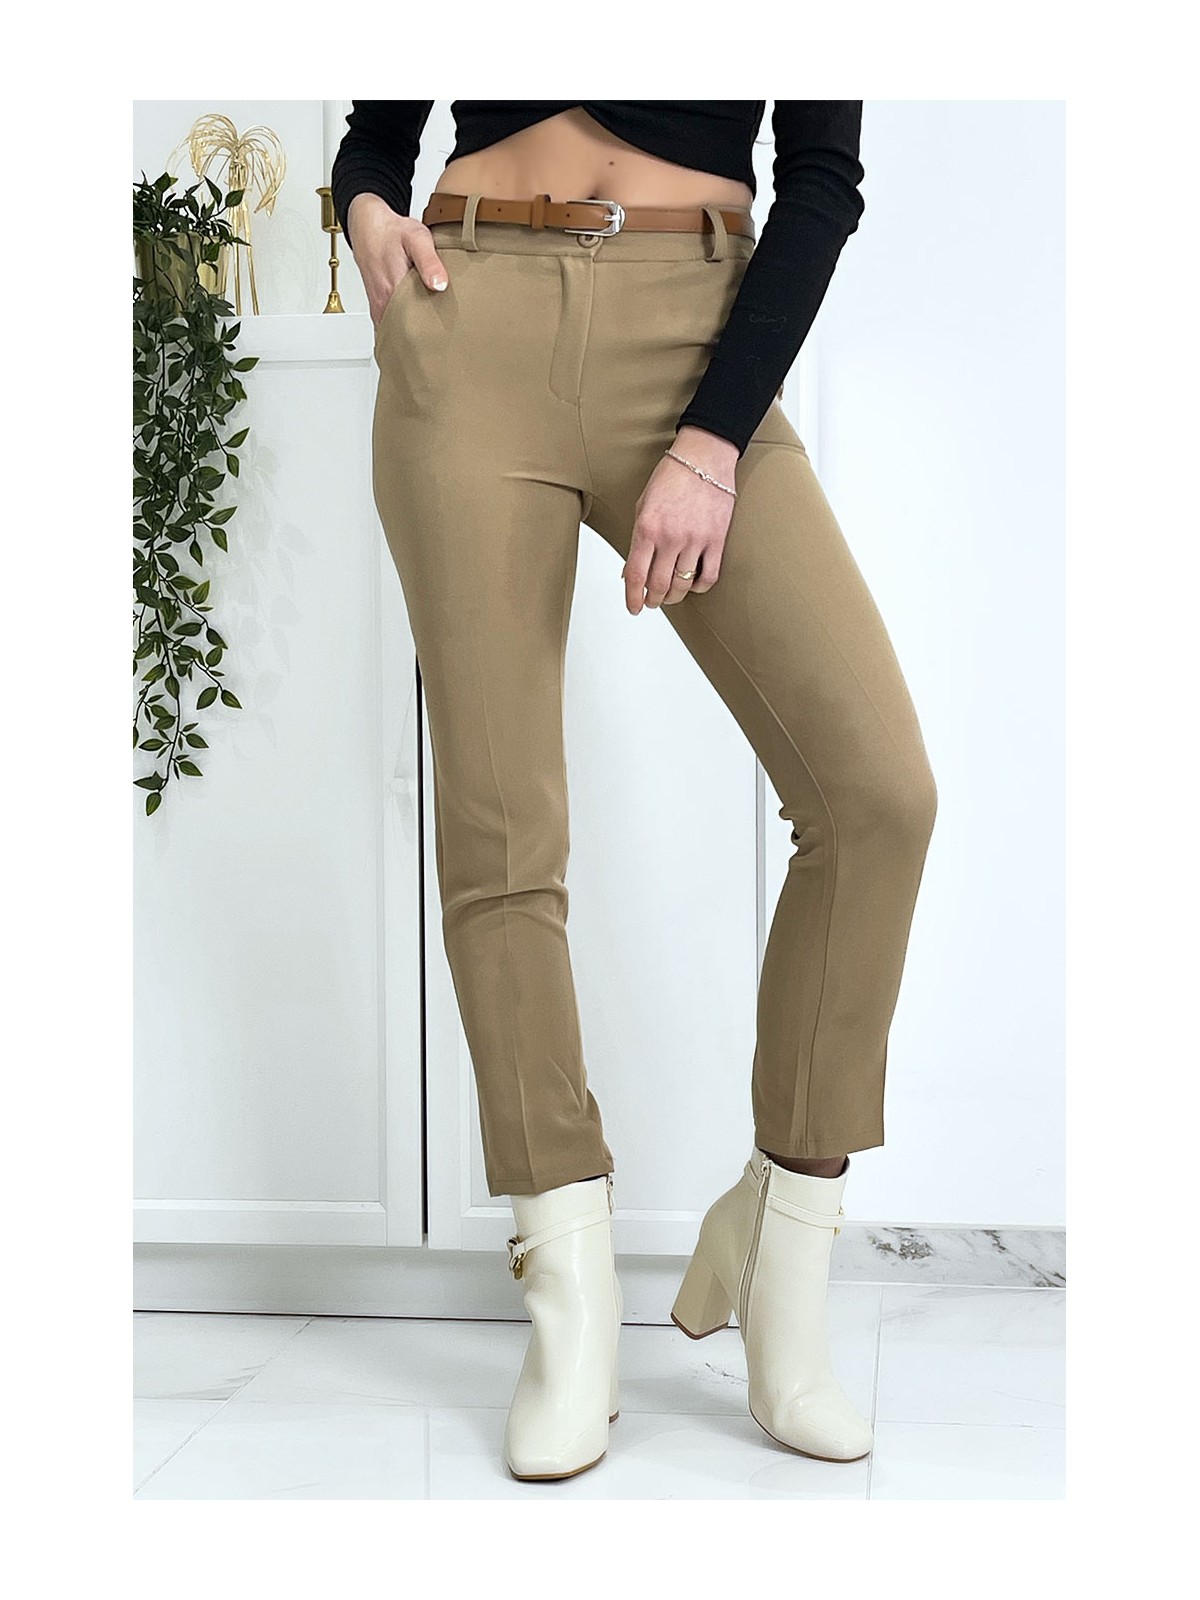 Pantalon working girl camel avec poches et ceinture - 2